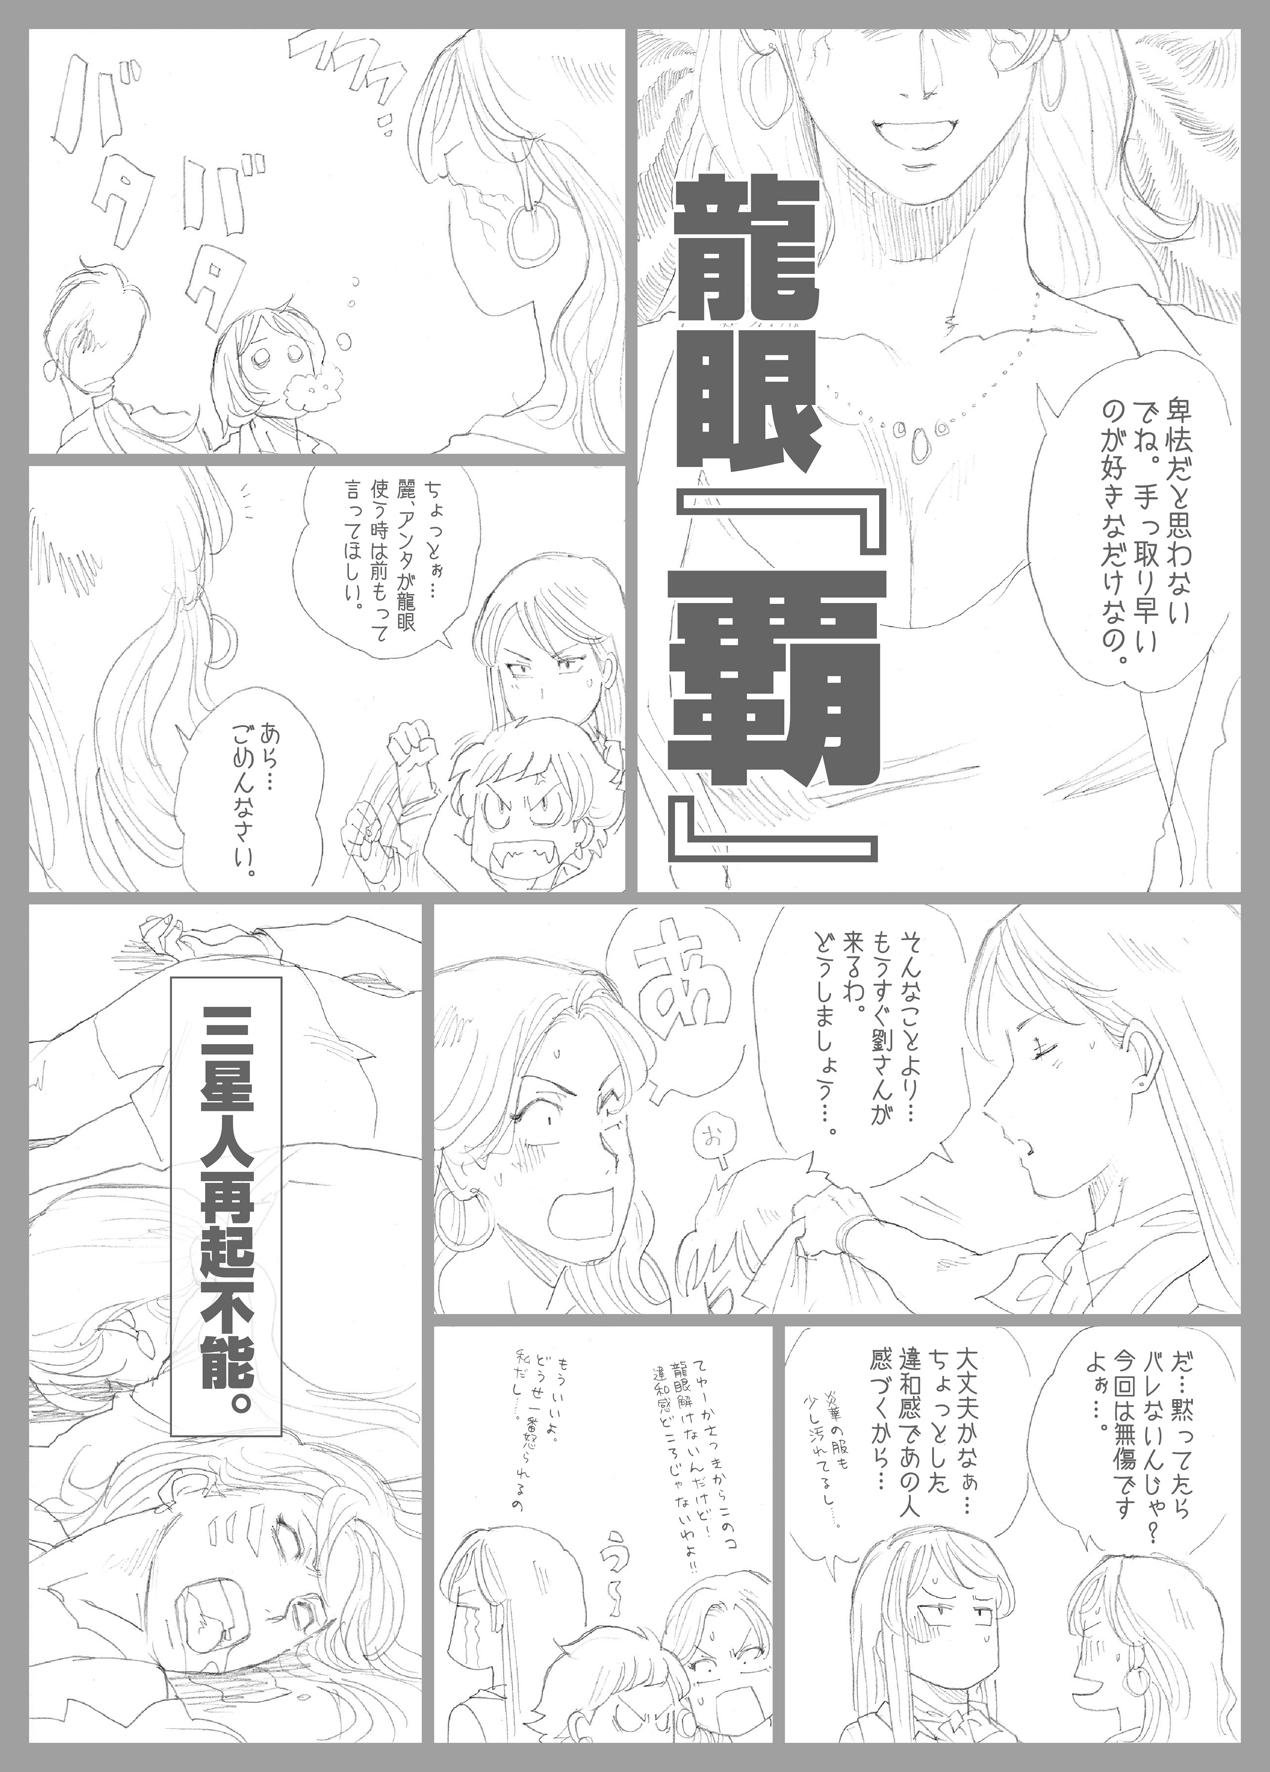 Realitykings Mousou Tokusatsu Series Ultra Madam 9 - Ultraman Outdoor - Page 30